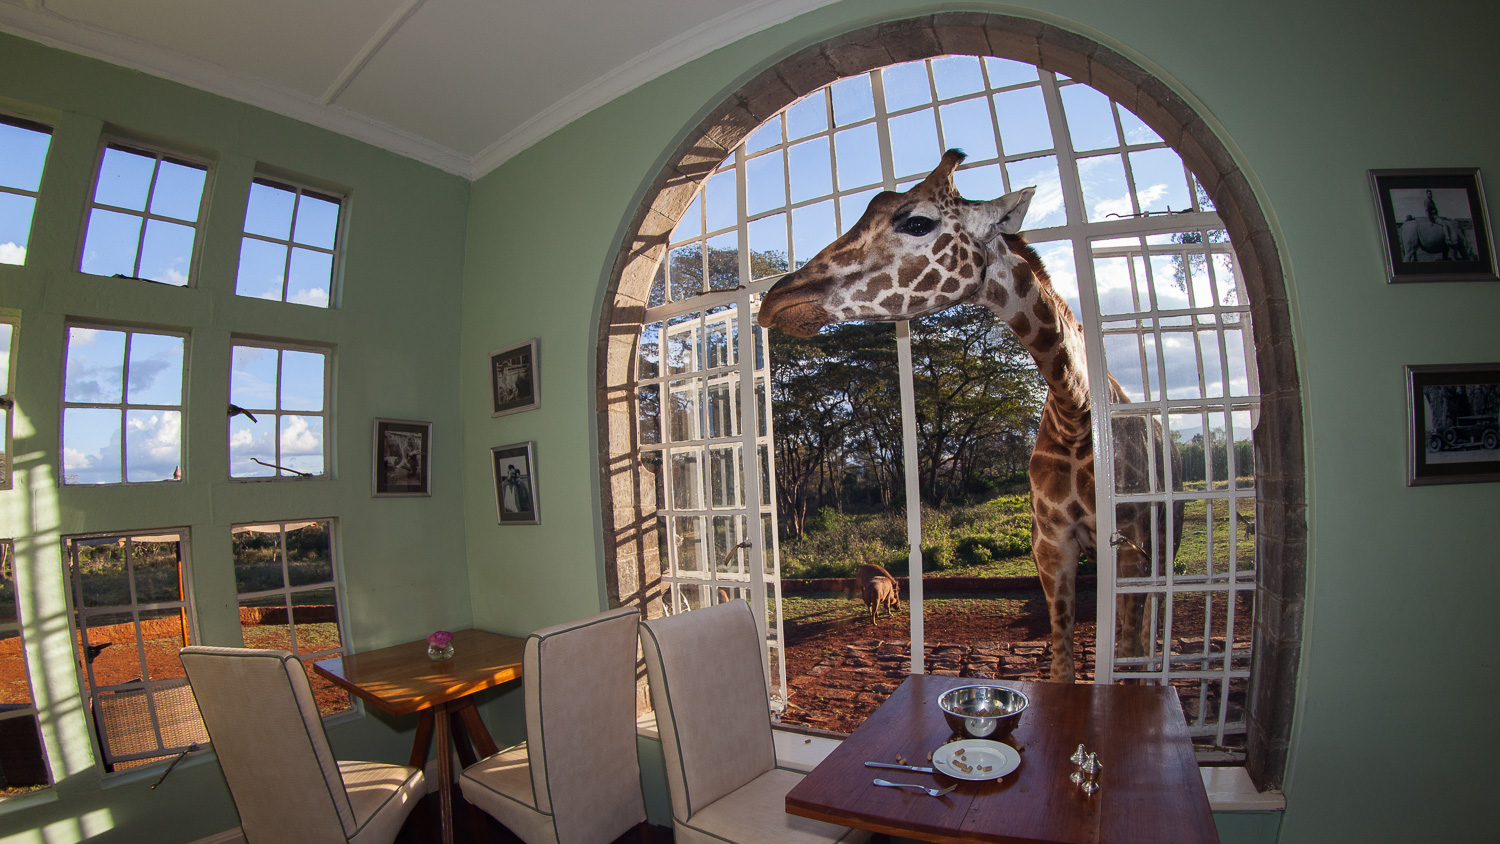 Girafa de Rothschild / Rothschild's giraffe / Giraffa camelopardalis rothschildi